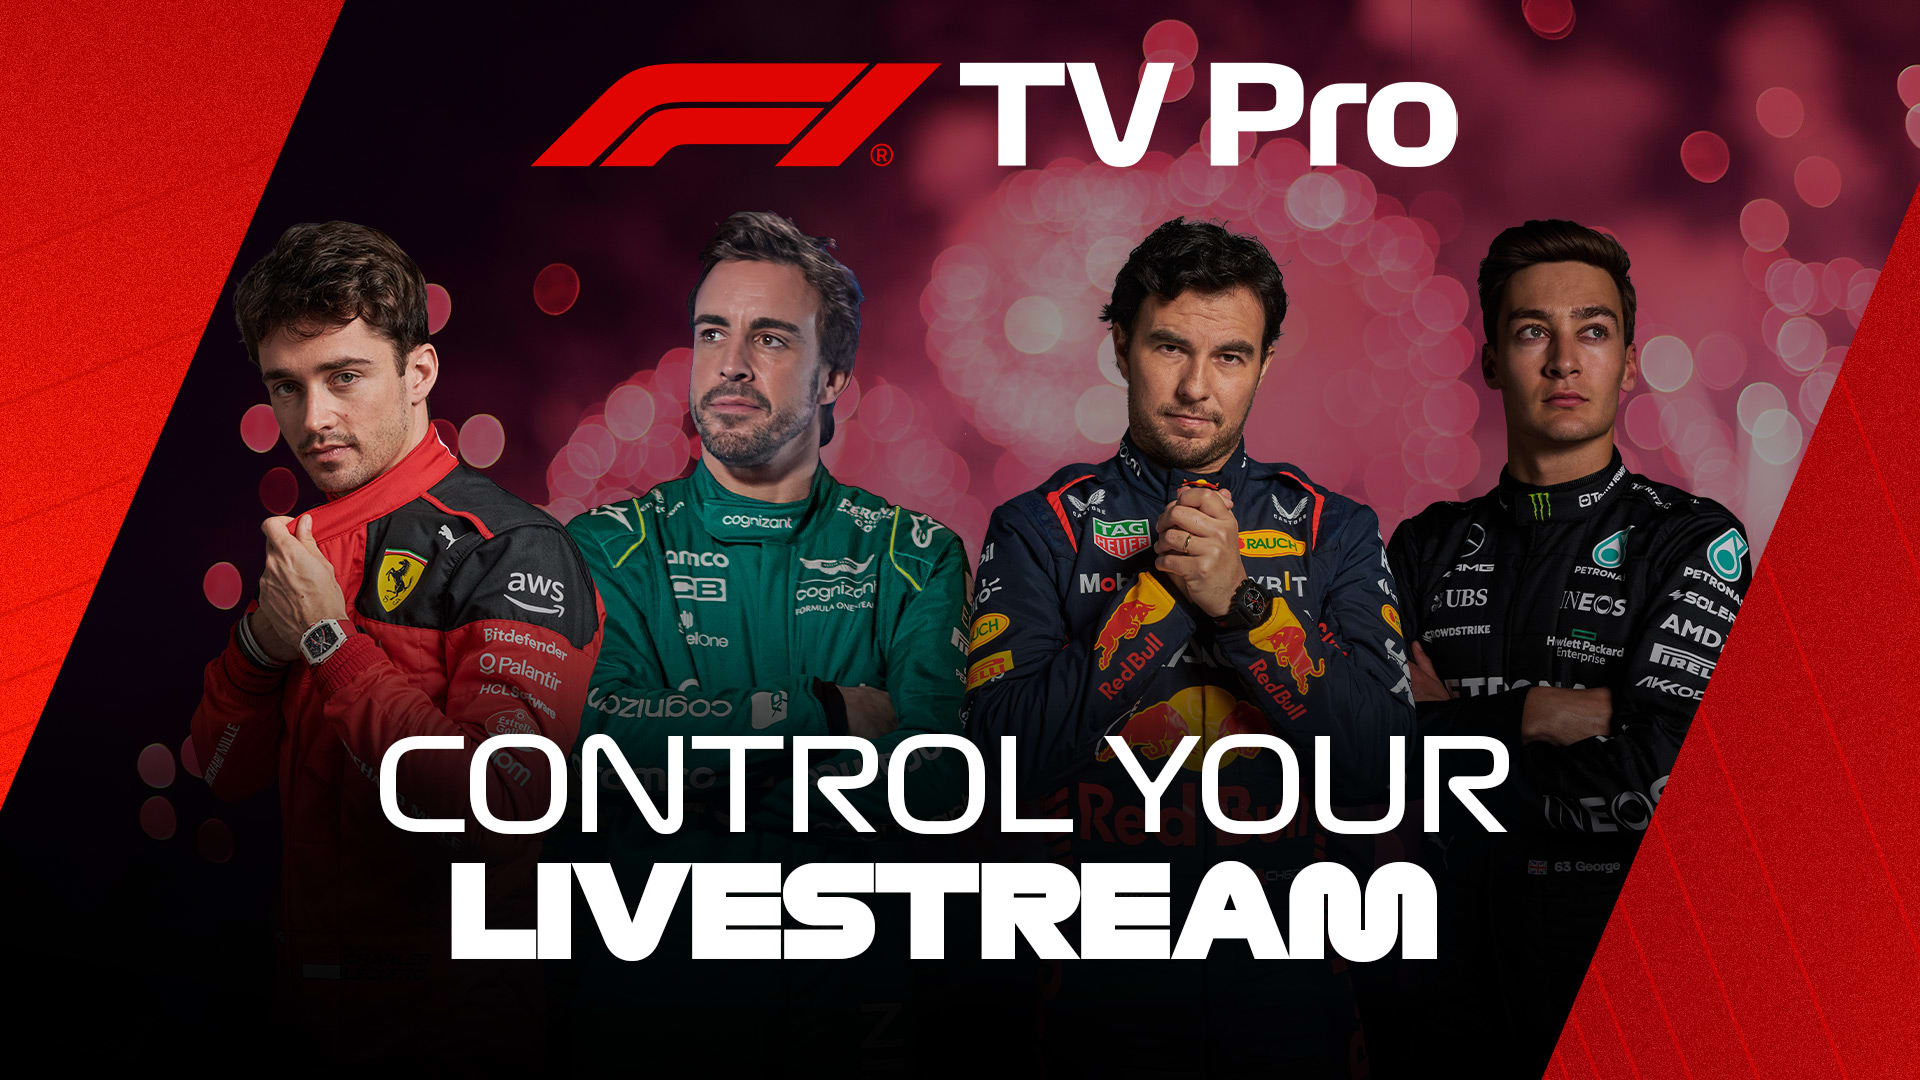 How to stream the 2023 Austrian Grand Prix on F1 TV Pro Formula 1®